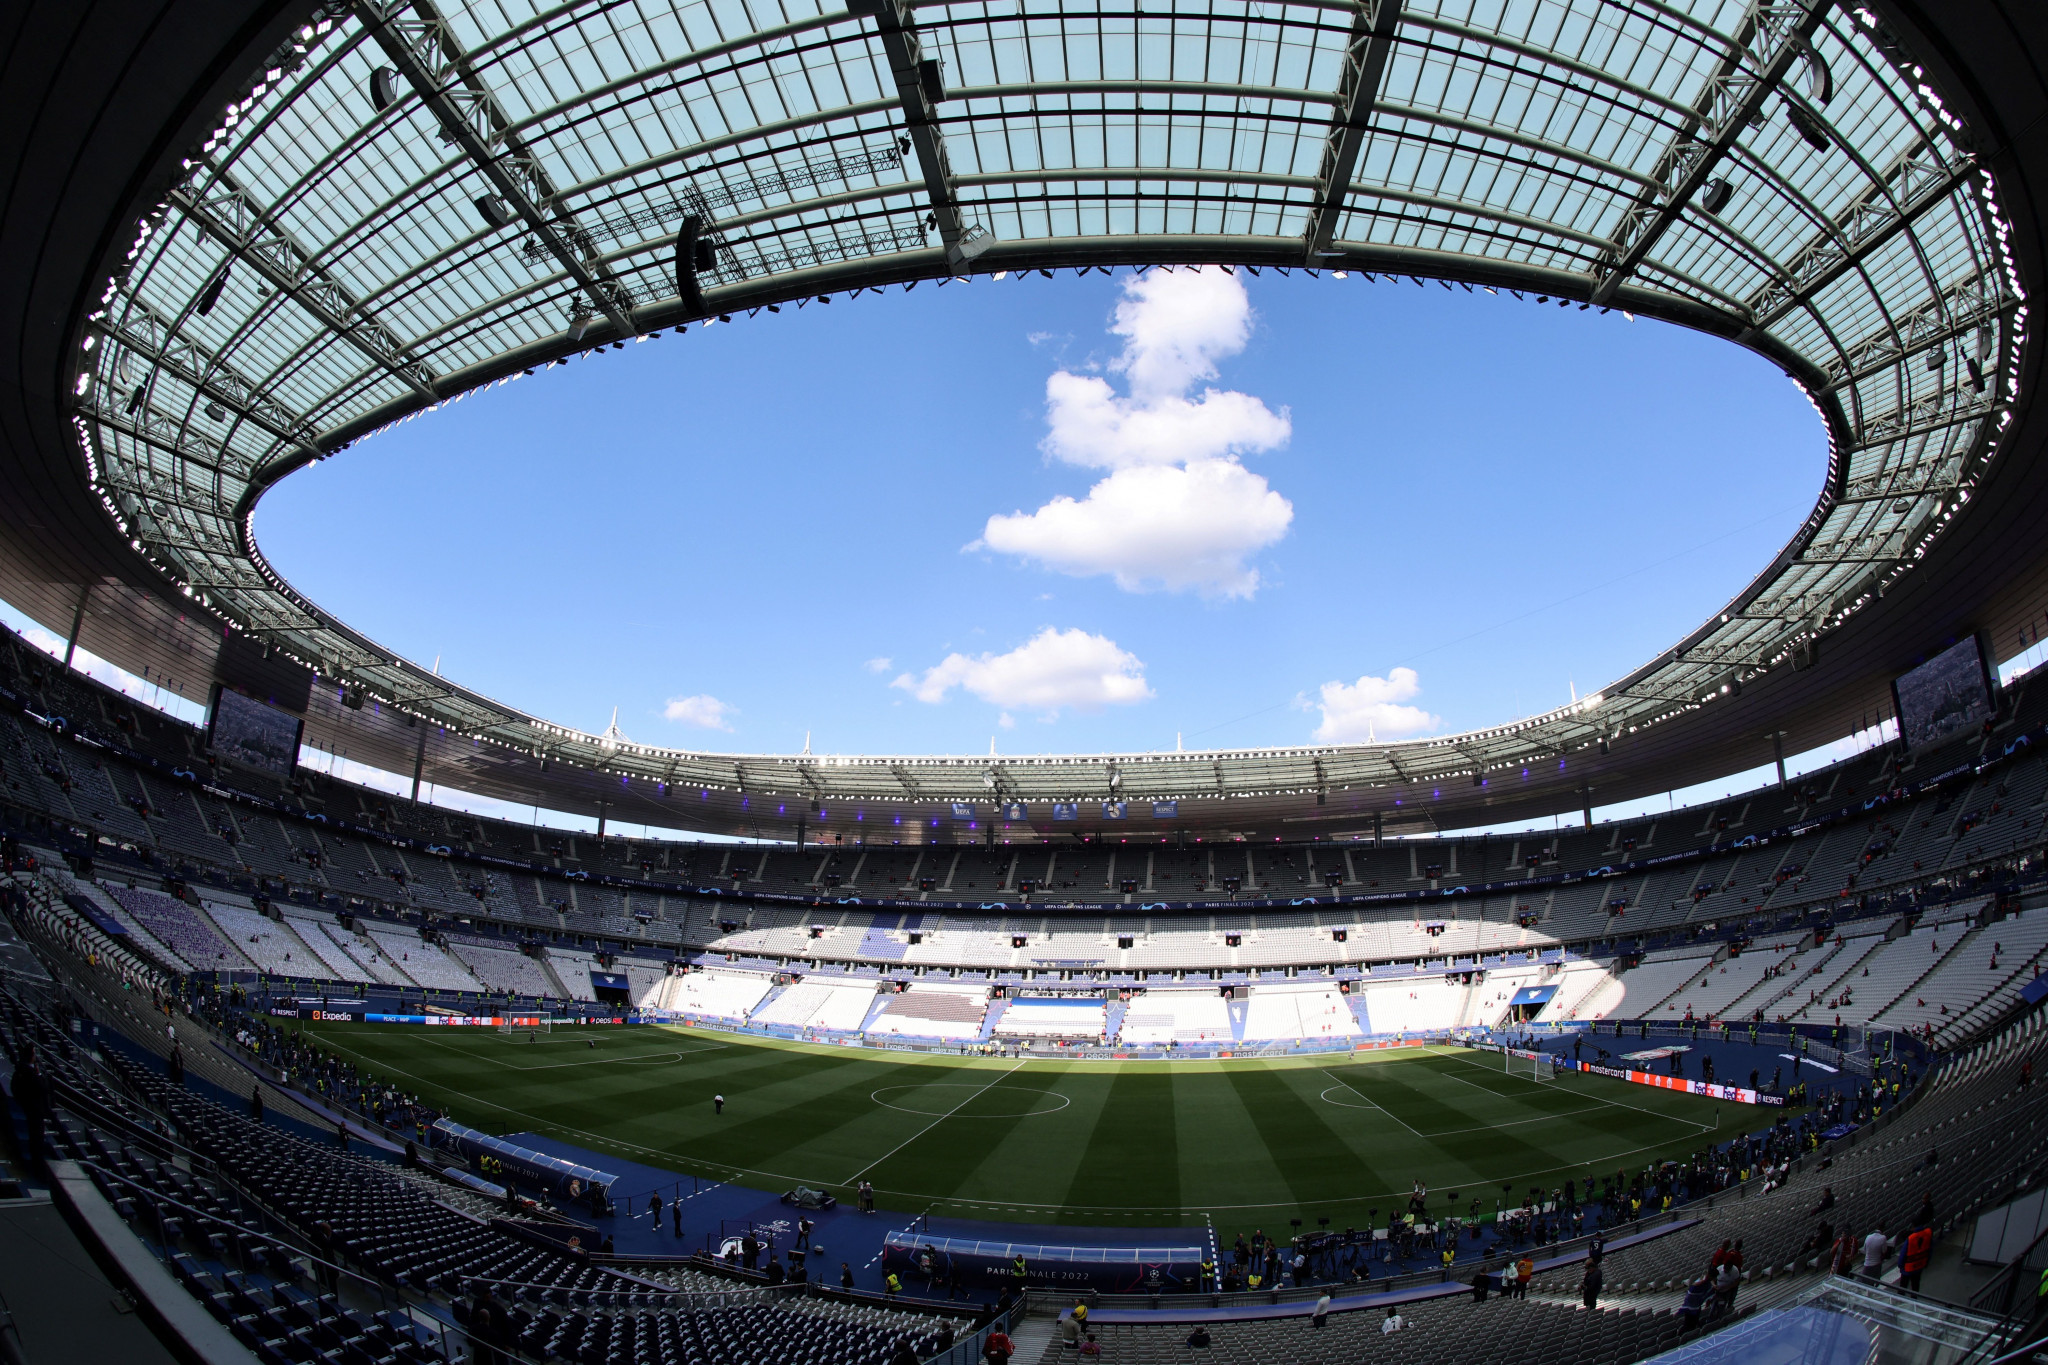 Stade de France almost ready for Paris 2024 Olympics claim officials